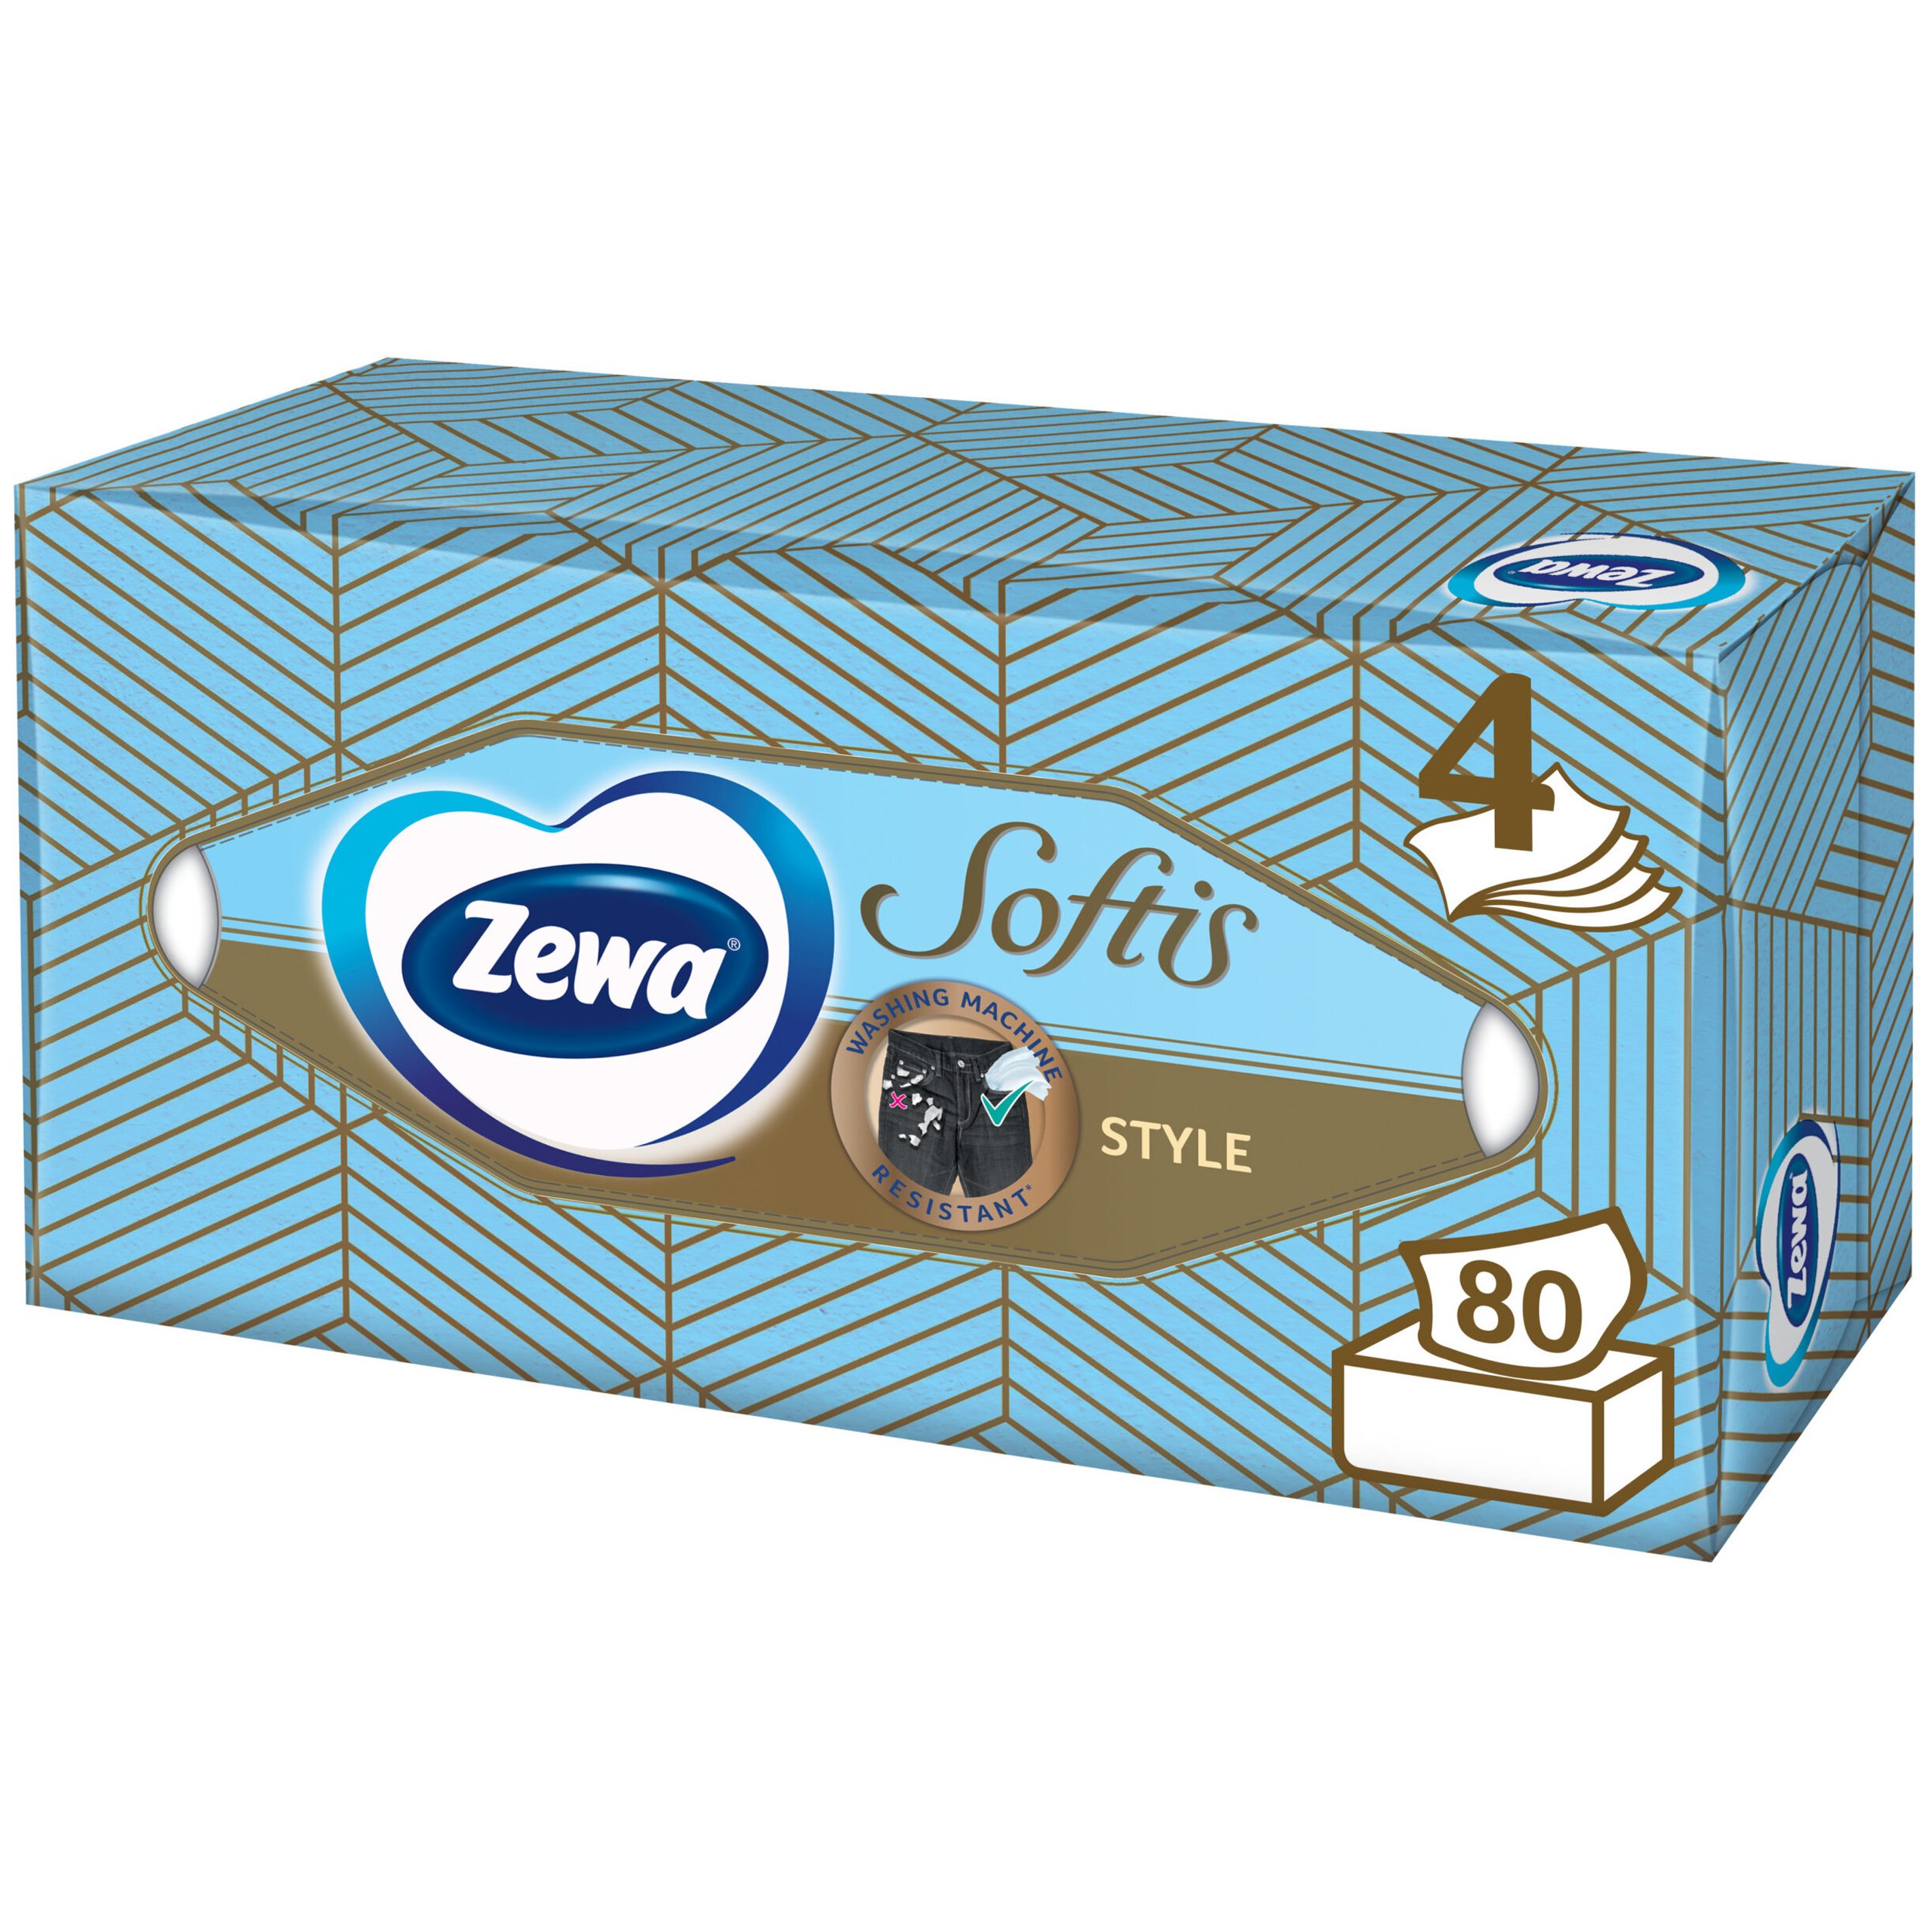 Zewa Zewa Softis Style Box Design Επιτραπέζια Χαρτομάντηλα Τετράφυλλα 80τμχ